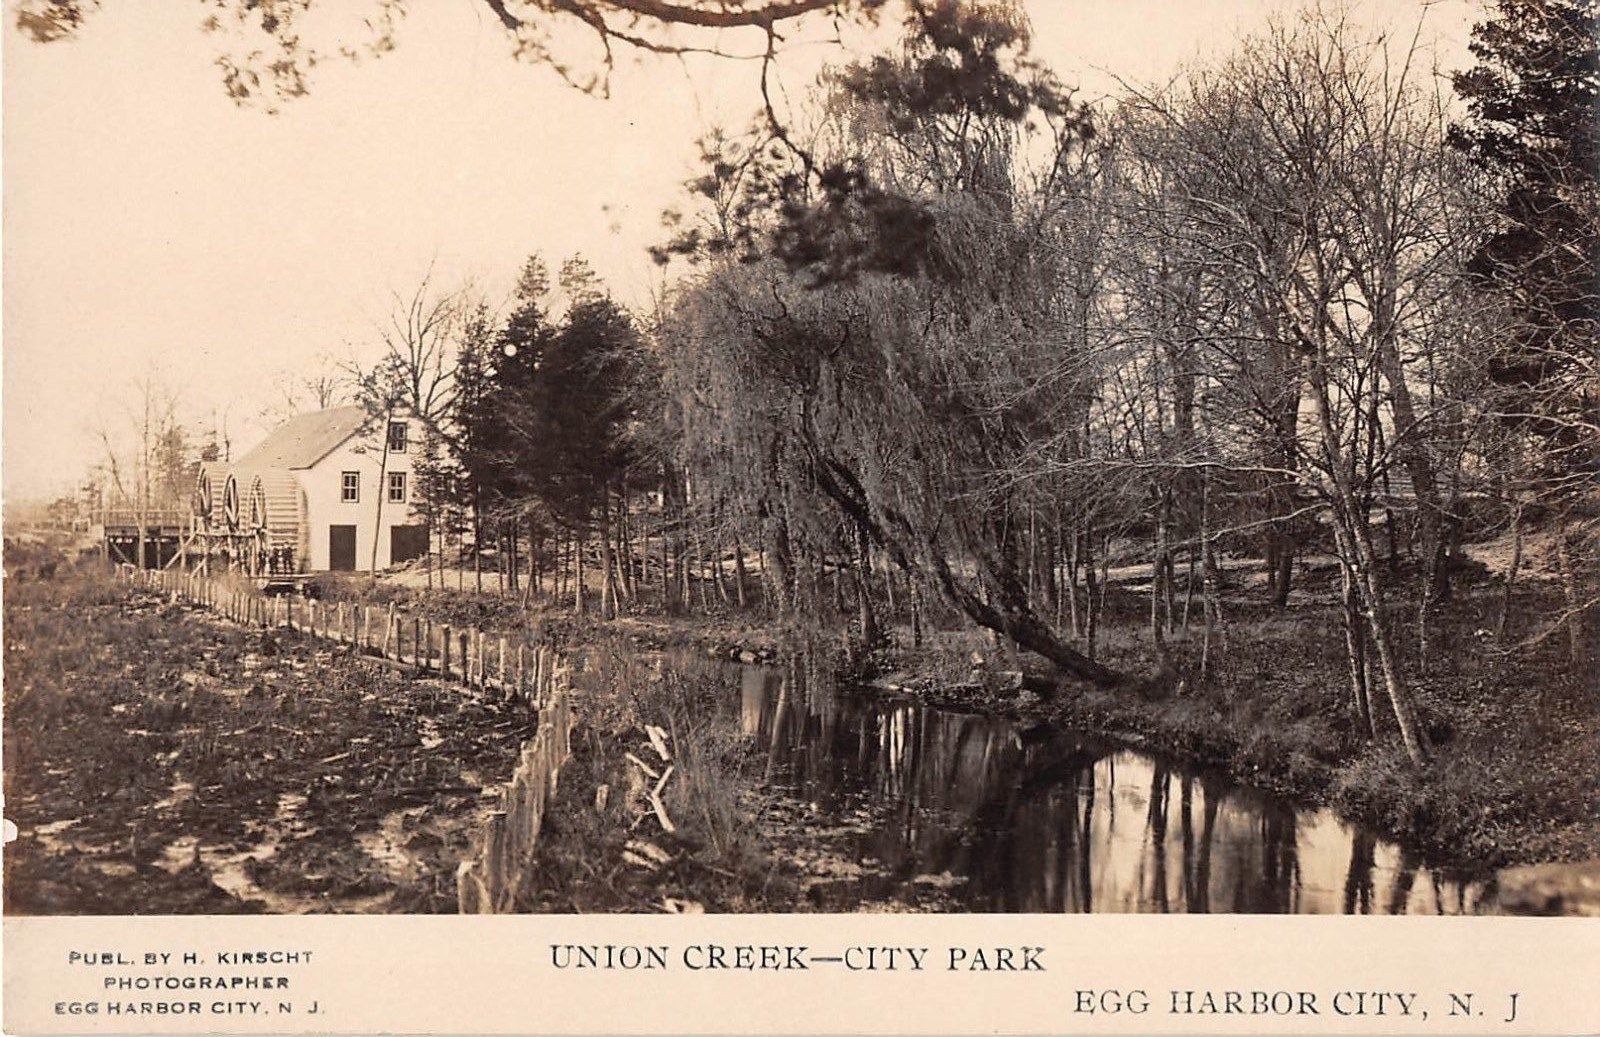 Egg Harbour City - Triple Wheel Mill Union Creek City Park - c 1910.jpg